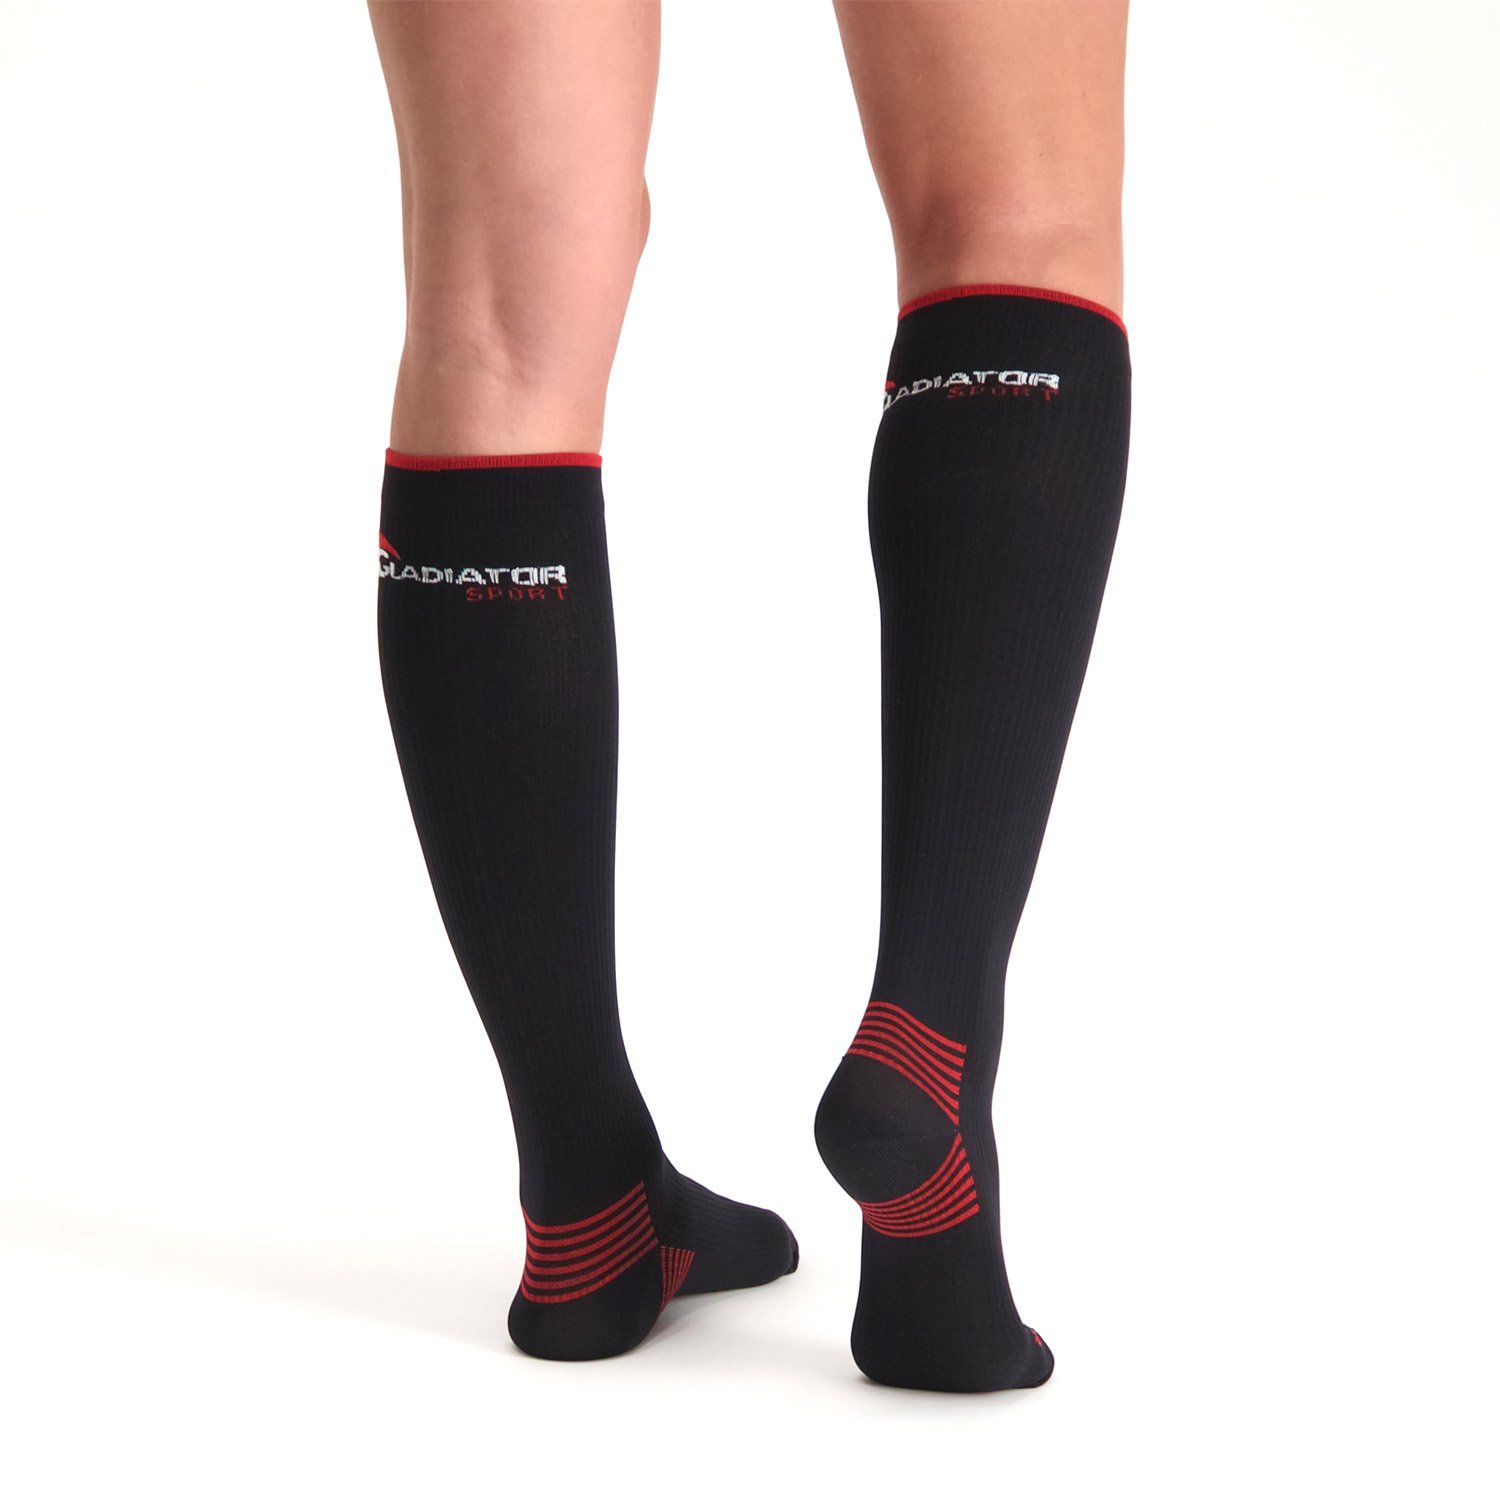 gladiator sports premium compression stockings worn backside